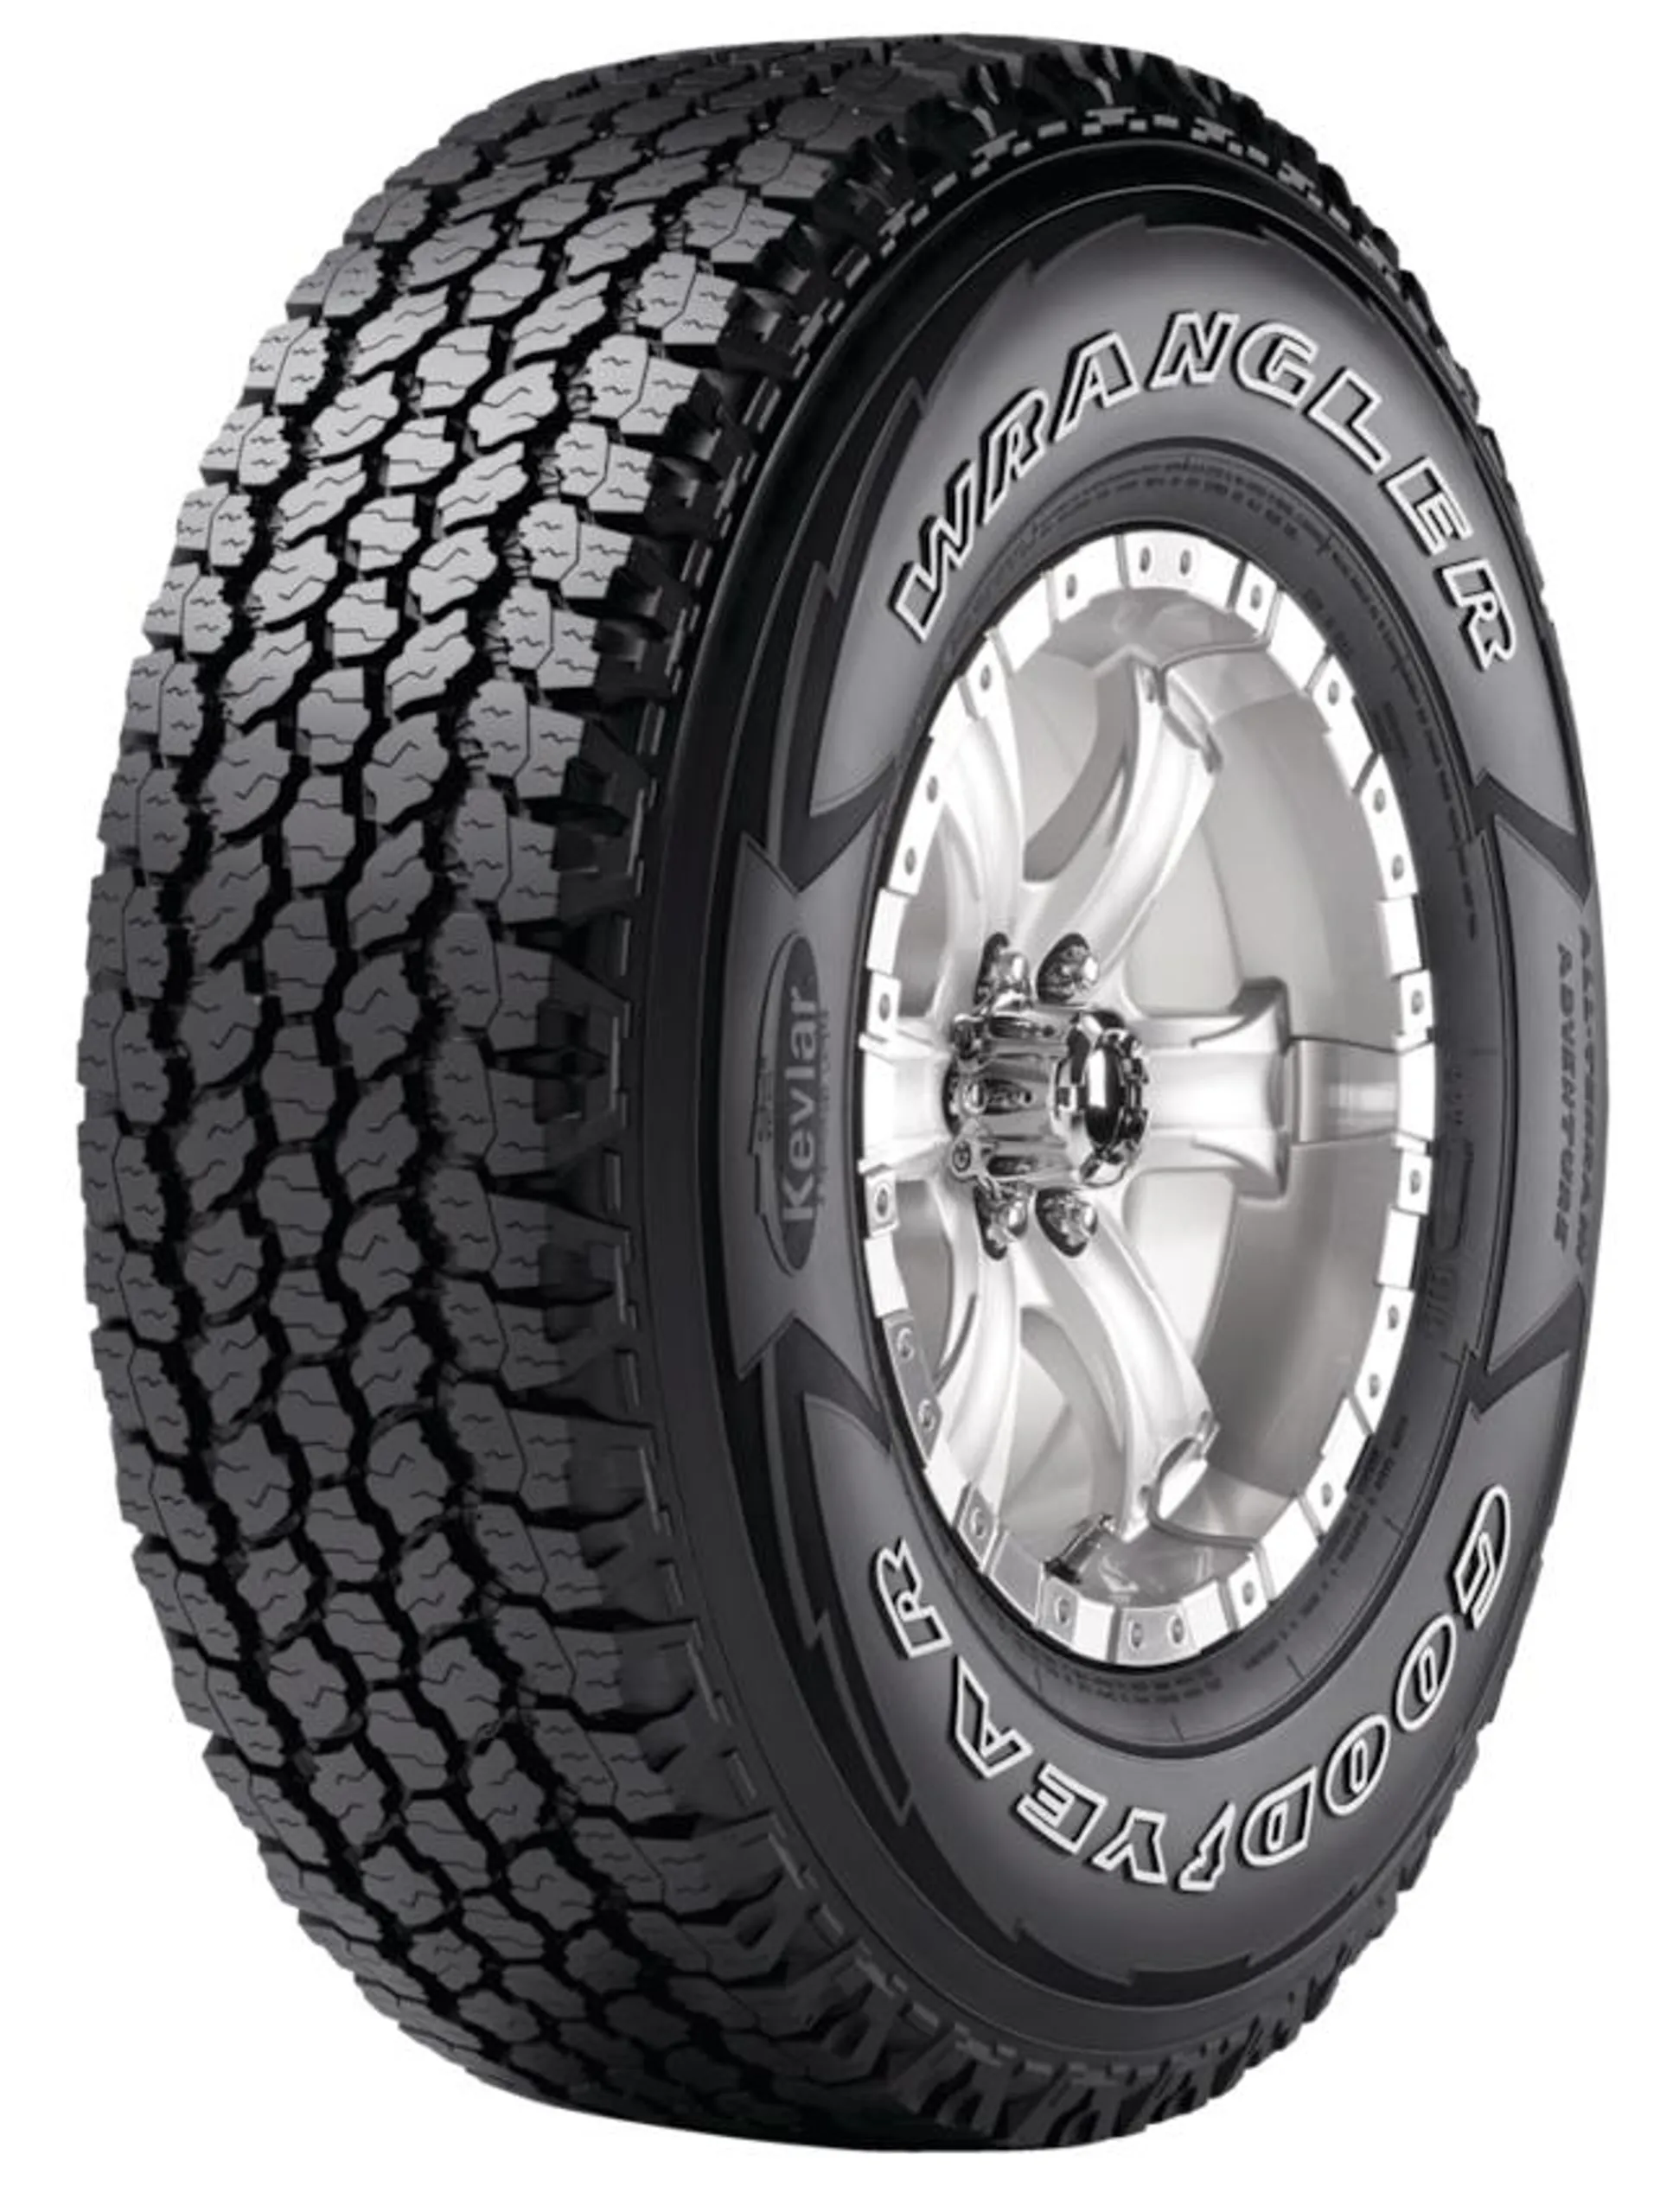 Goodyear Wrangler All-Terrain Adventure All Season Tire For Truck & SUV